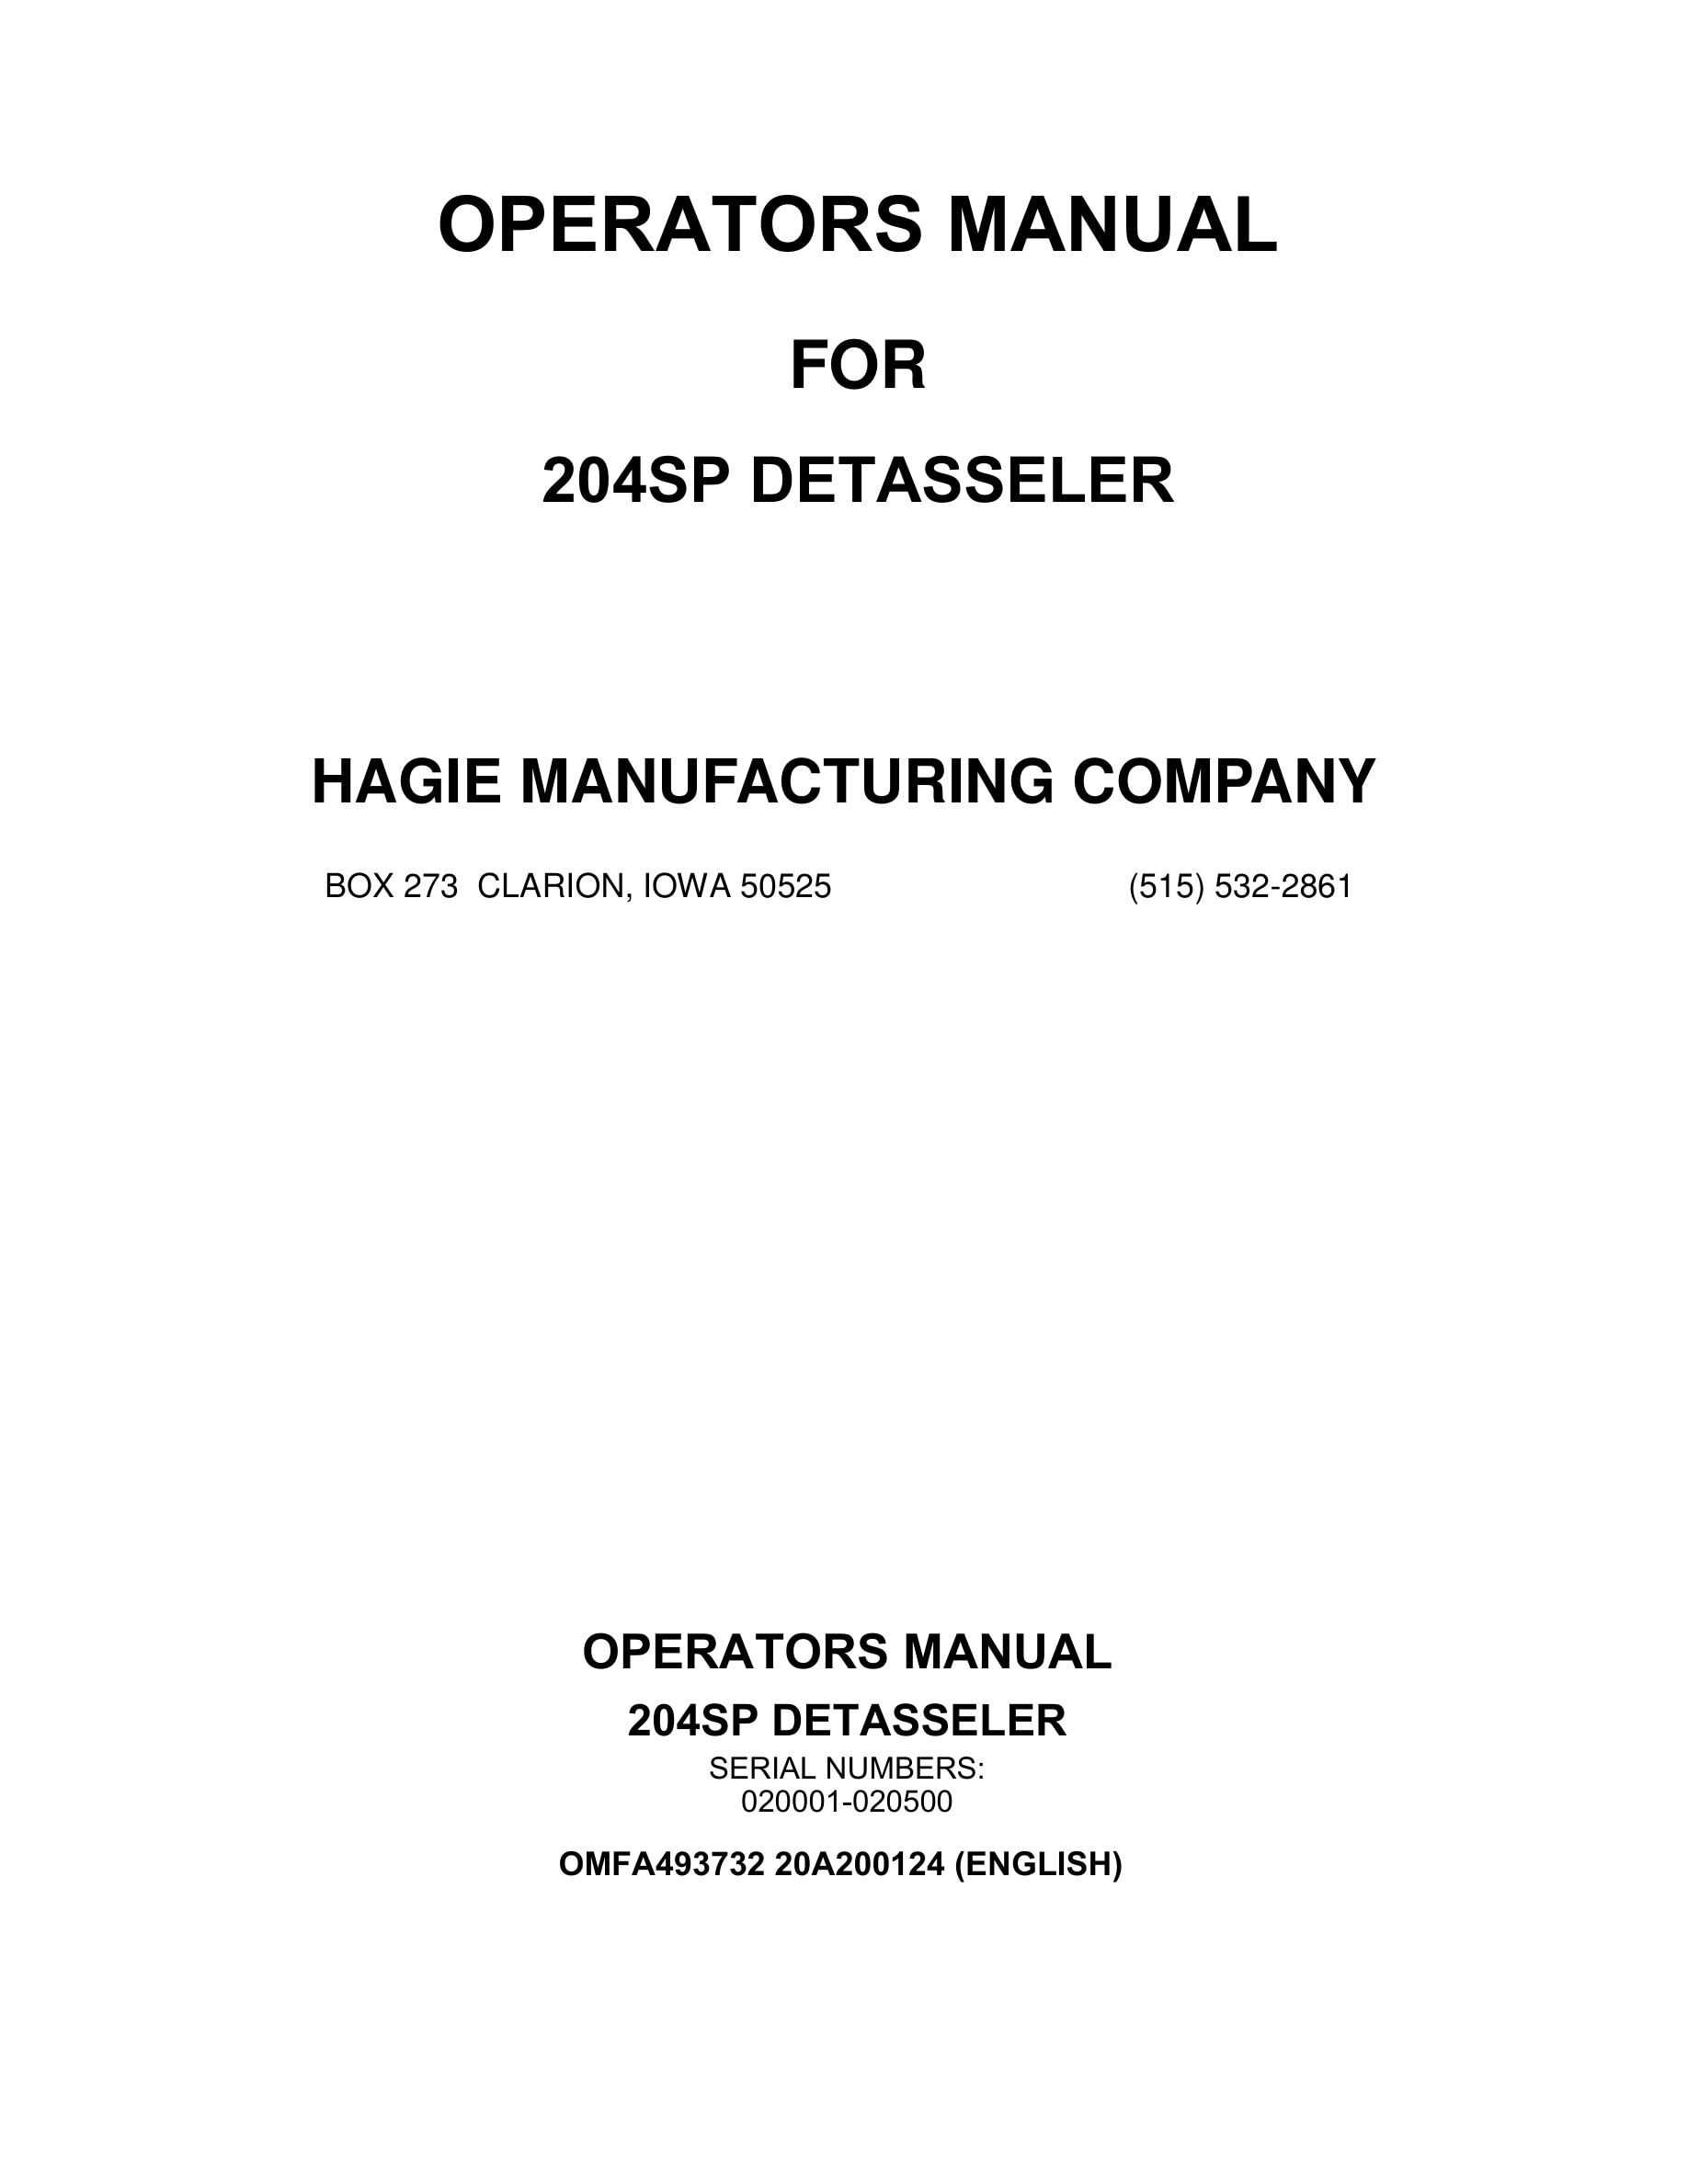 John Deere 204SP DETASSELER Operator Manual OMFA493732-1